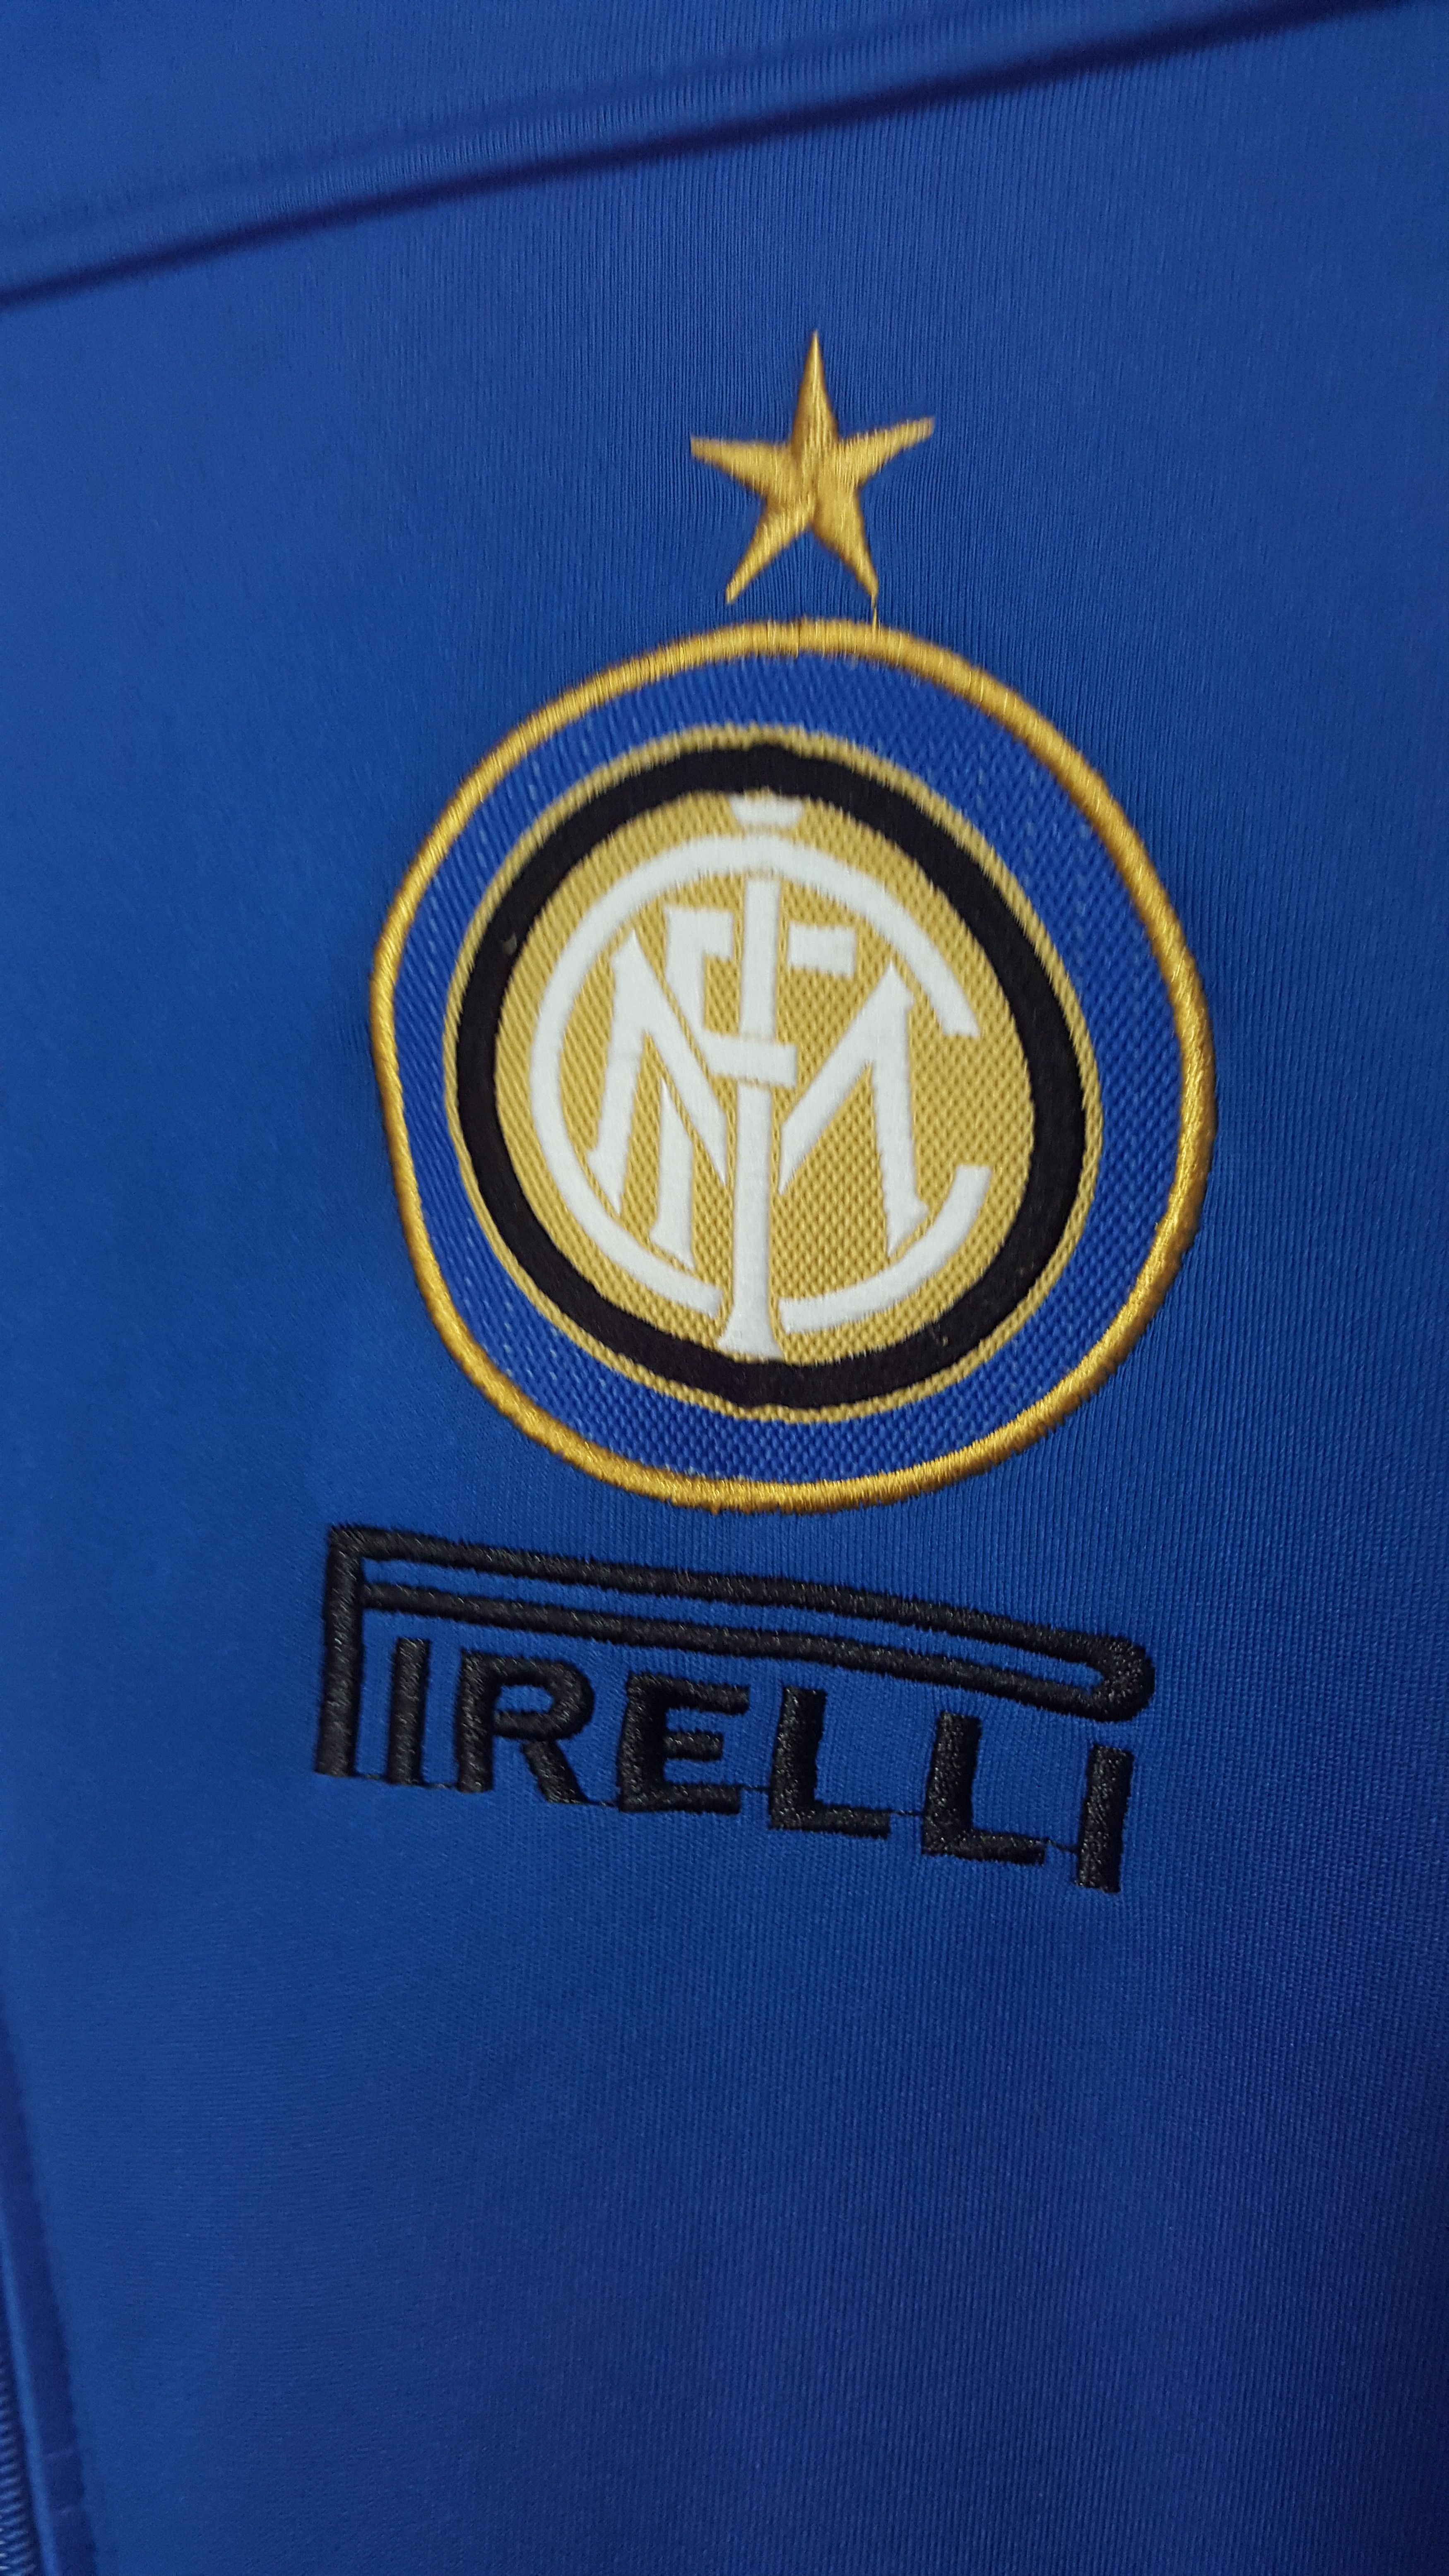 Nike Nike Inter Milan Football Club Pirelli Soccer Hoodie Size US S / EU 44-46 / 1 - 3 Thumbnail